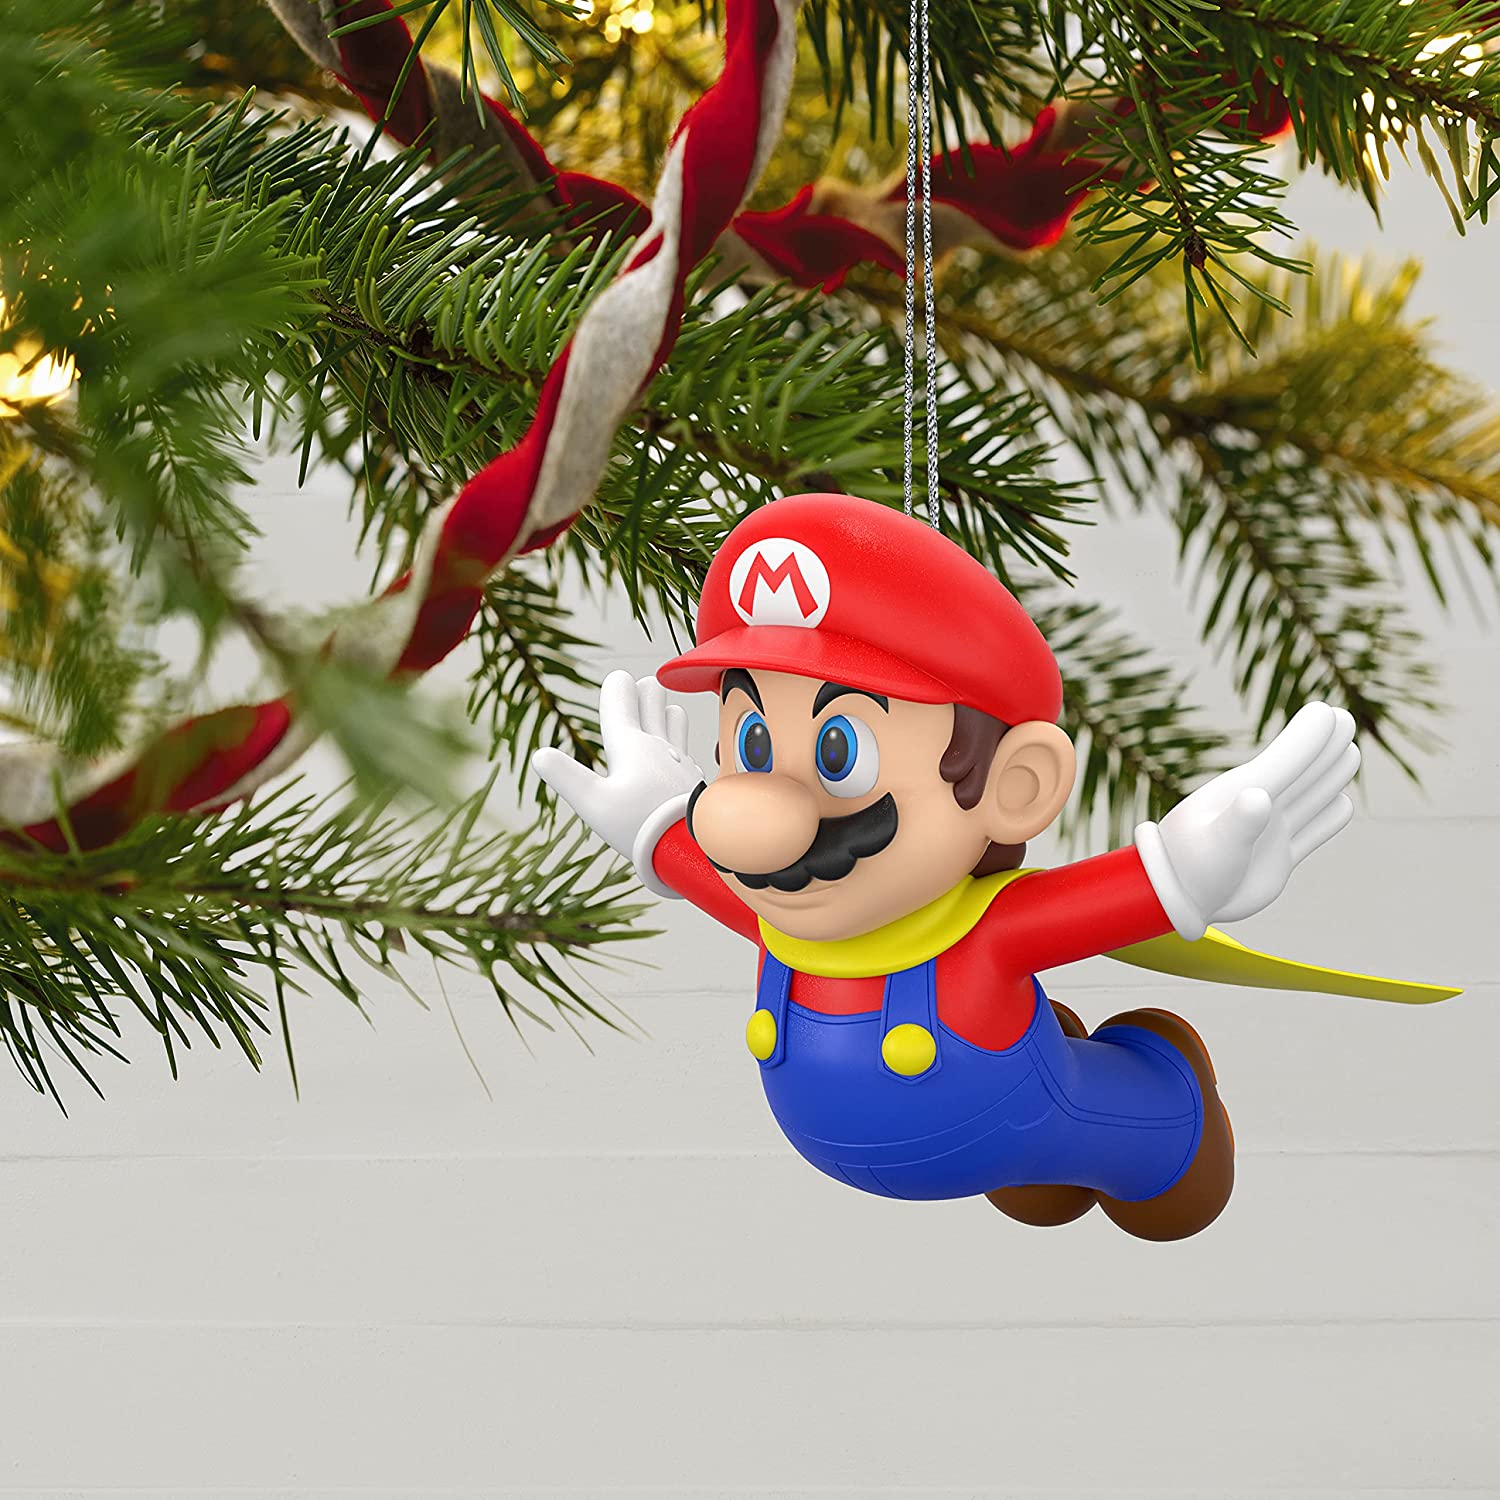 Flying Mario NES Christmas ornament